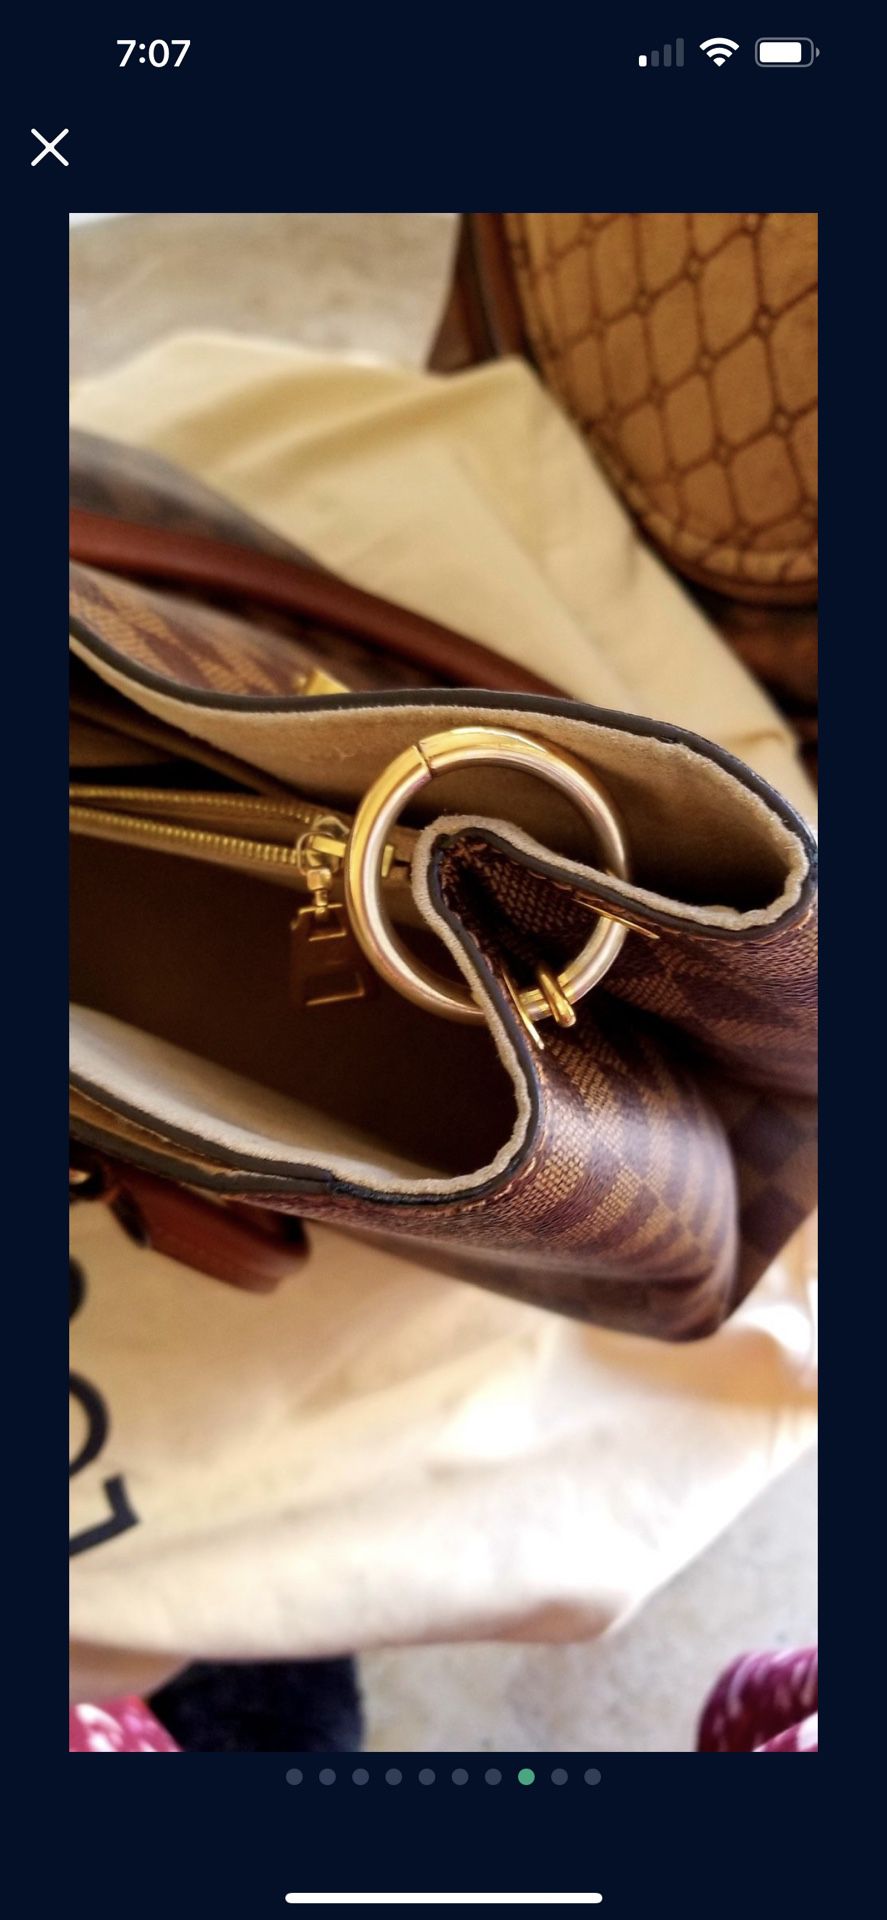 Louis Vuitton Riverside Bag - $2602 (10% Off Retail) - From Jenna